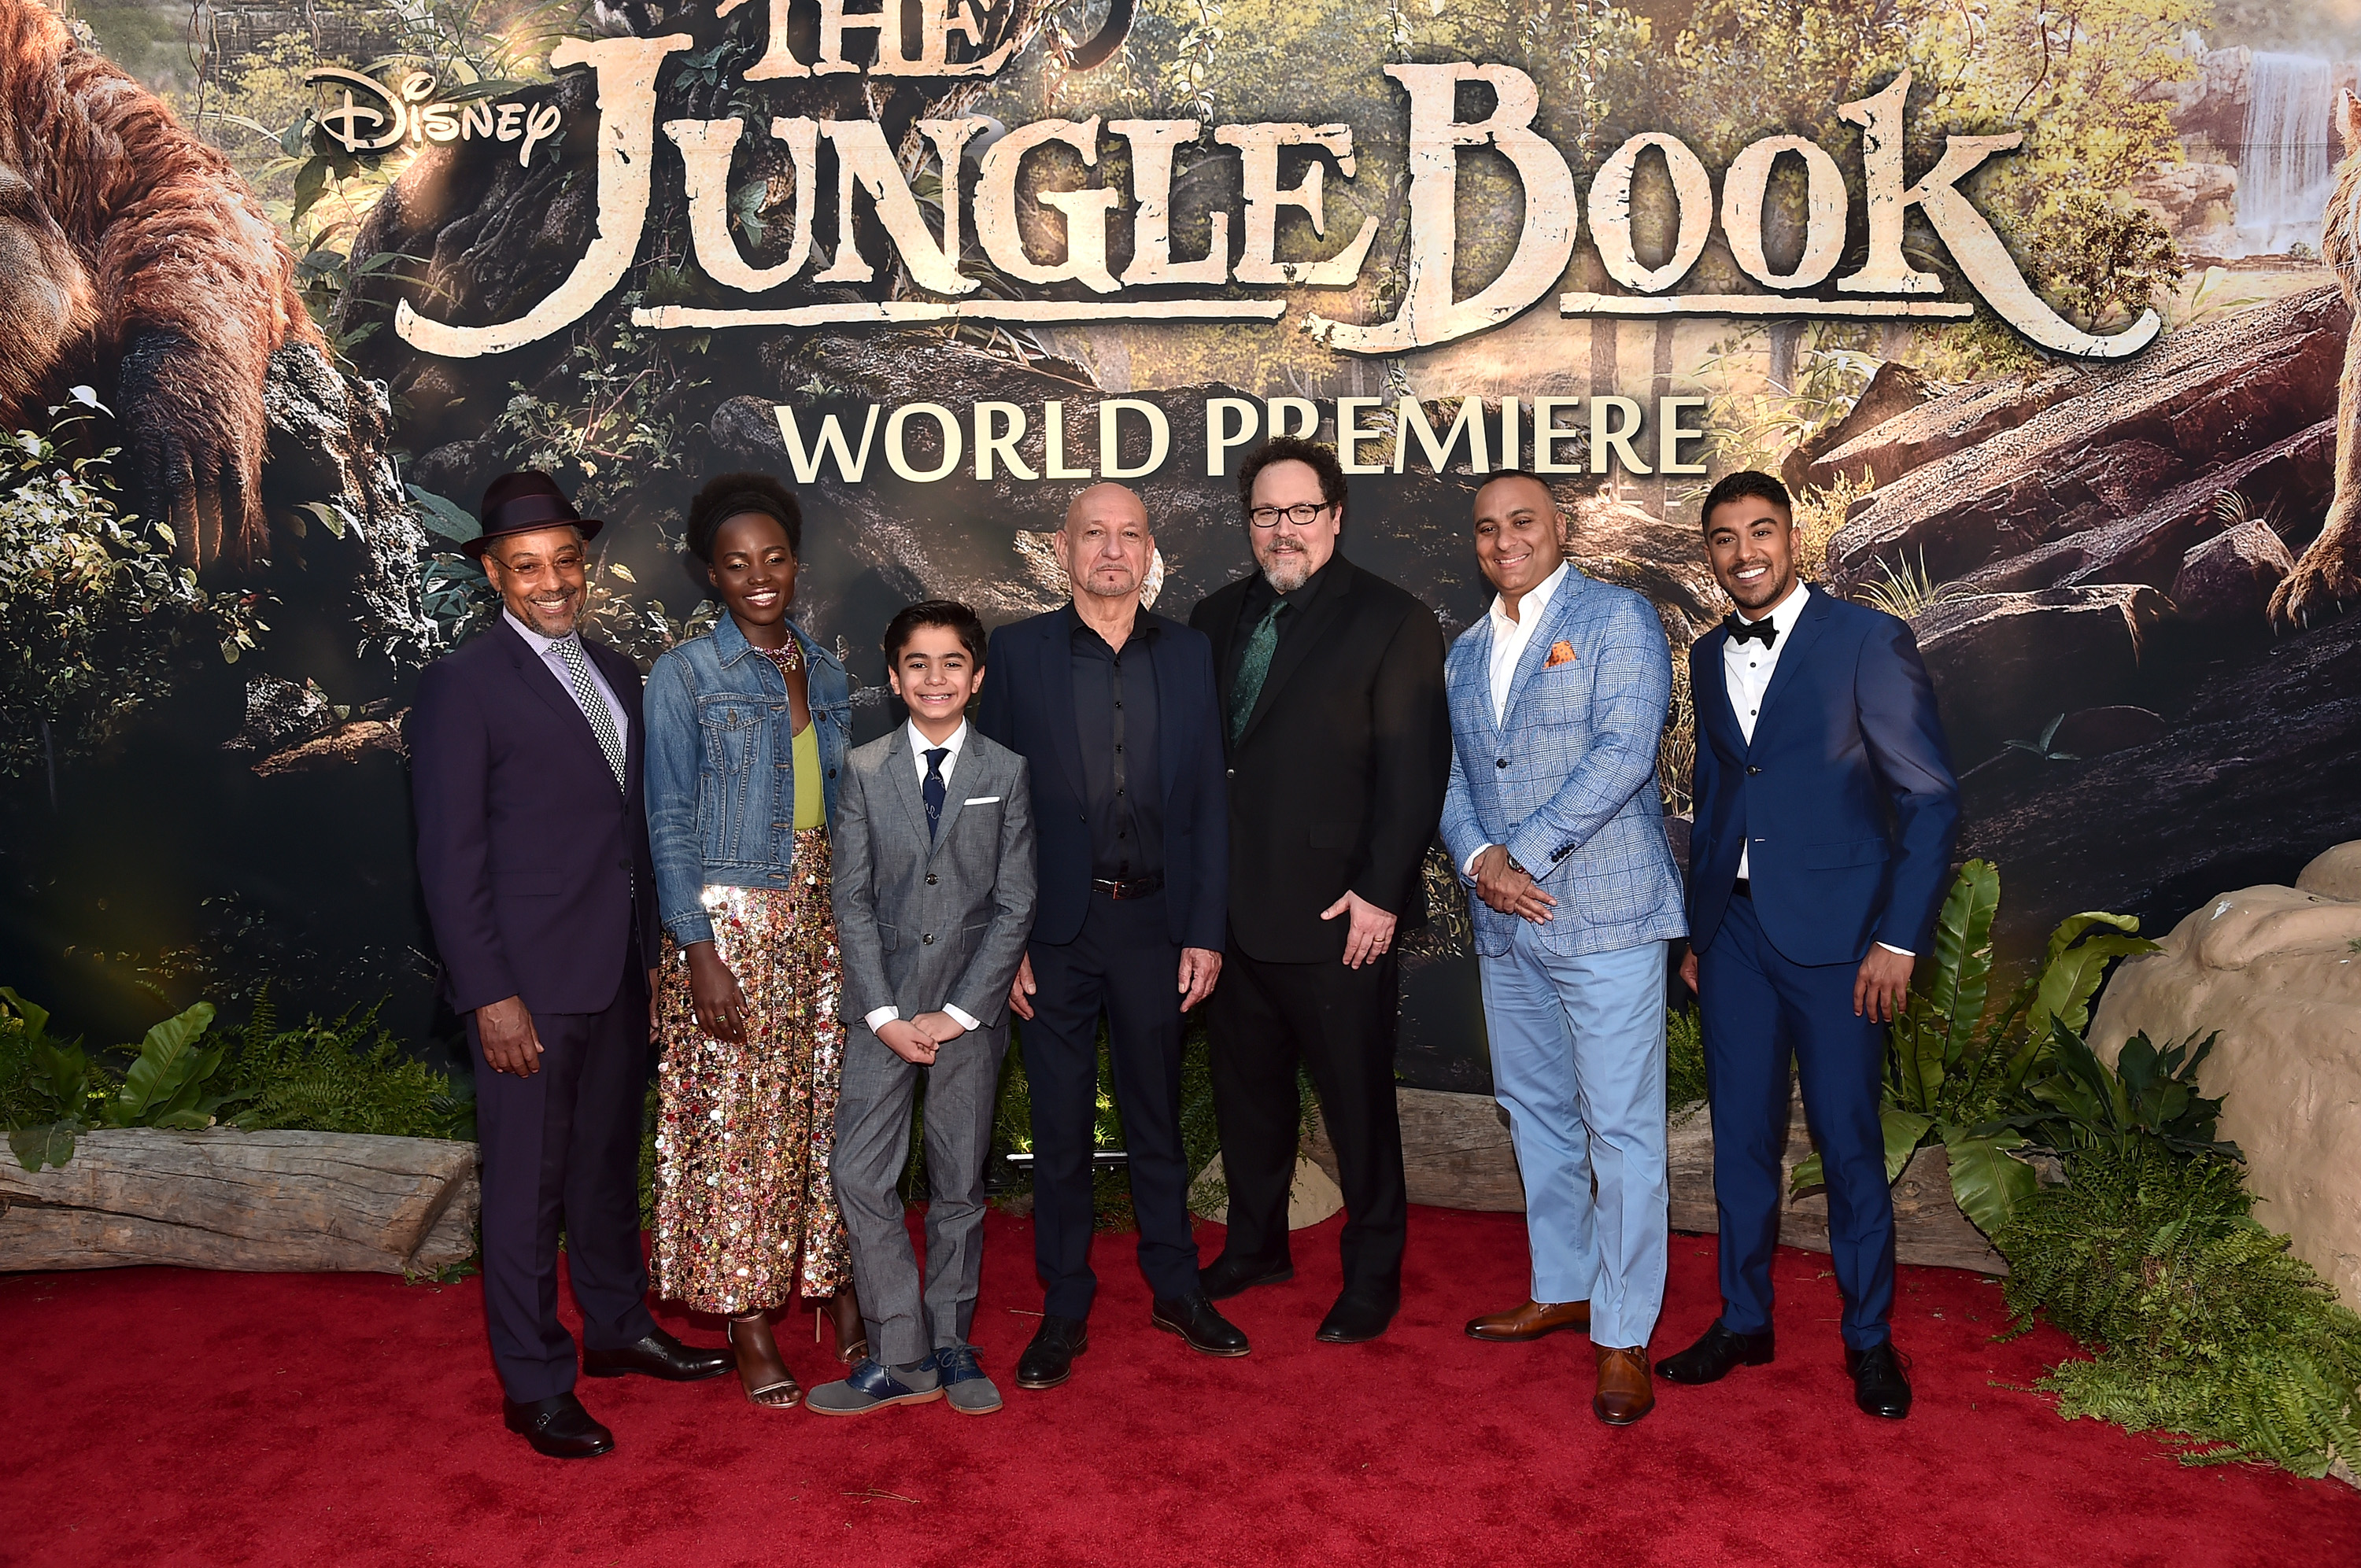 The Jungle Book World Premiere Photos